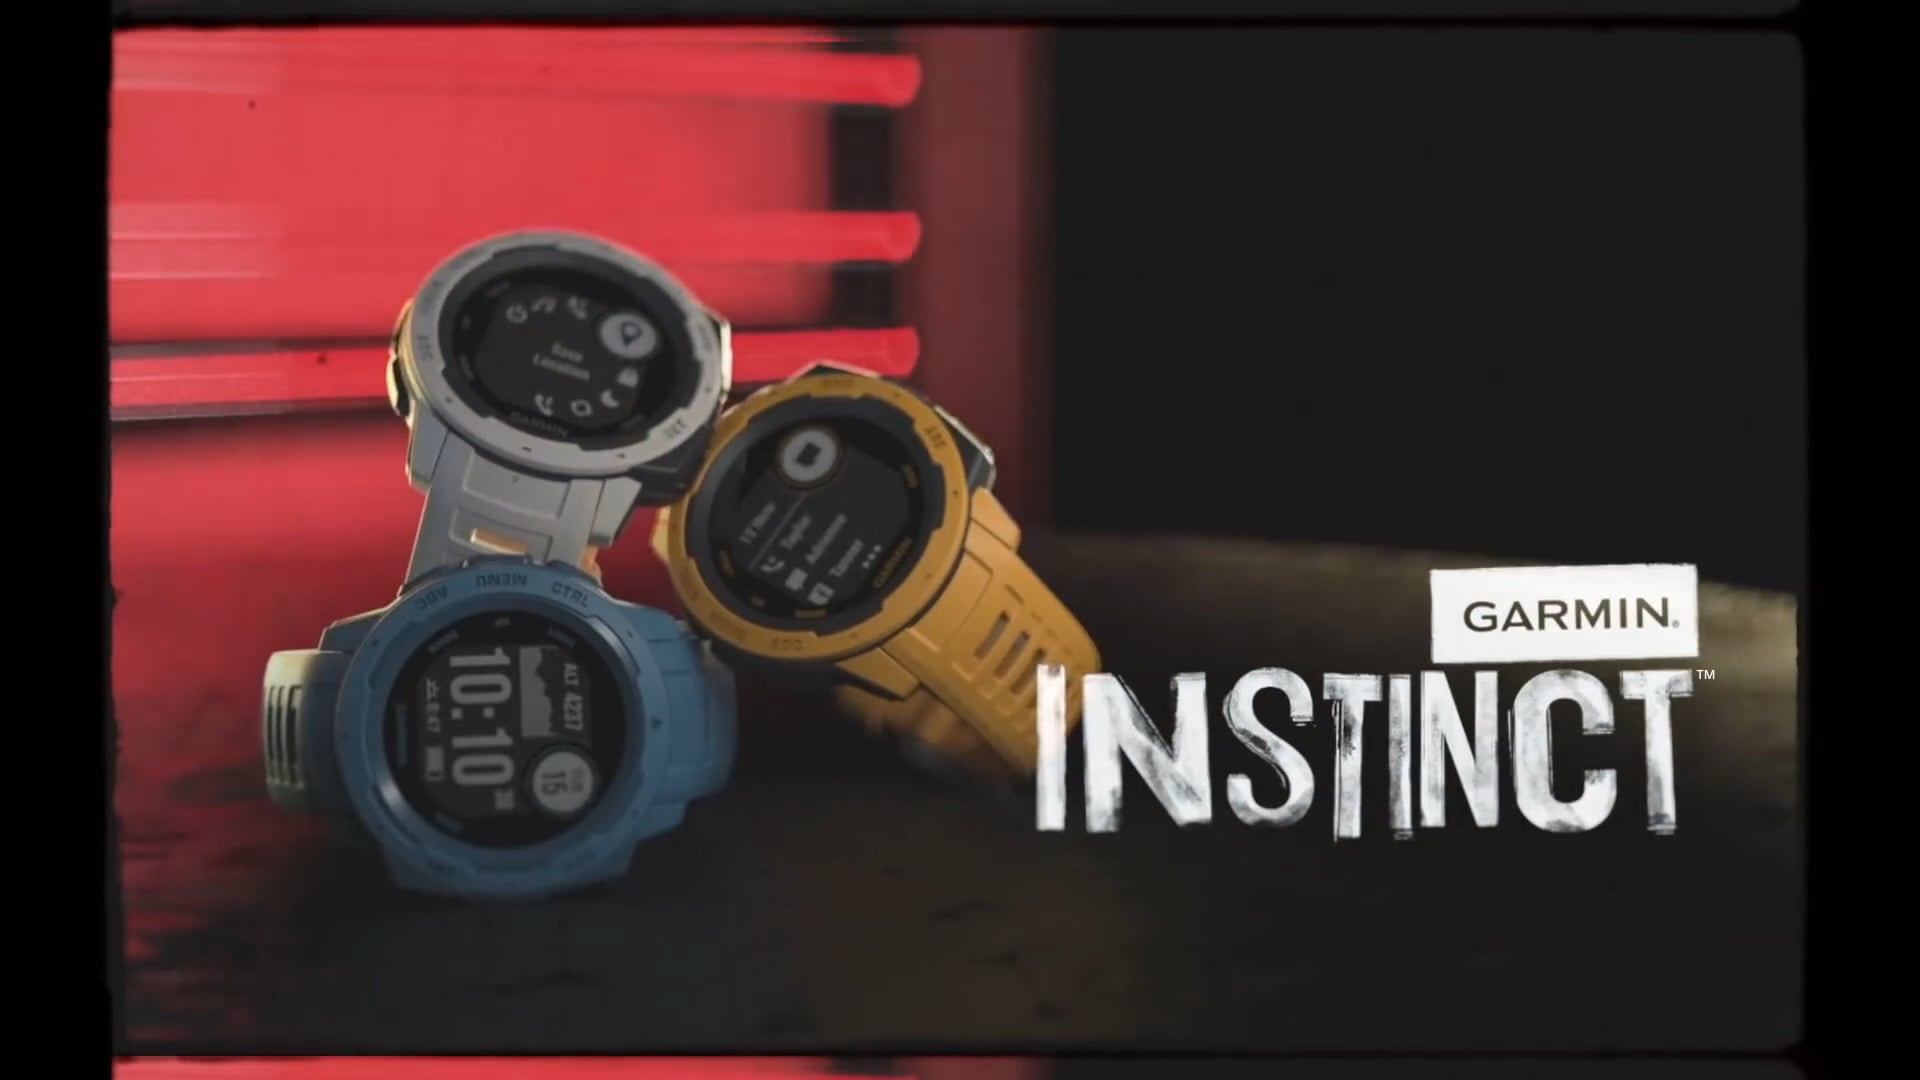 Instinct by Garmin - Commercial